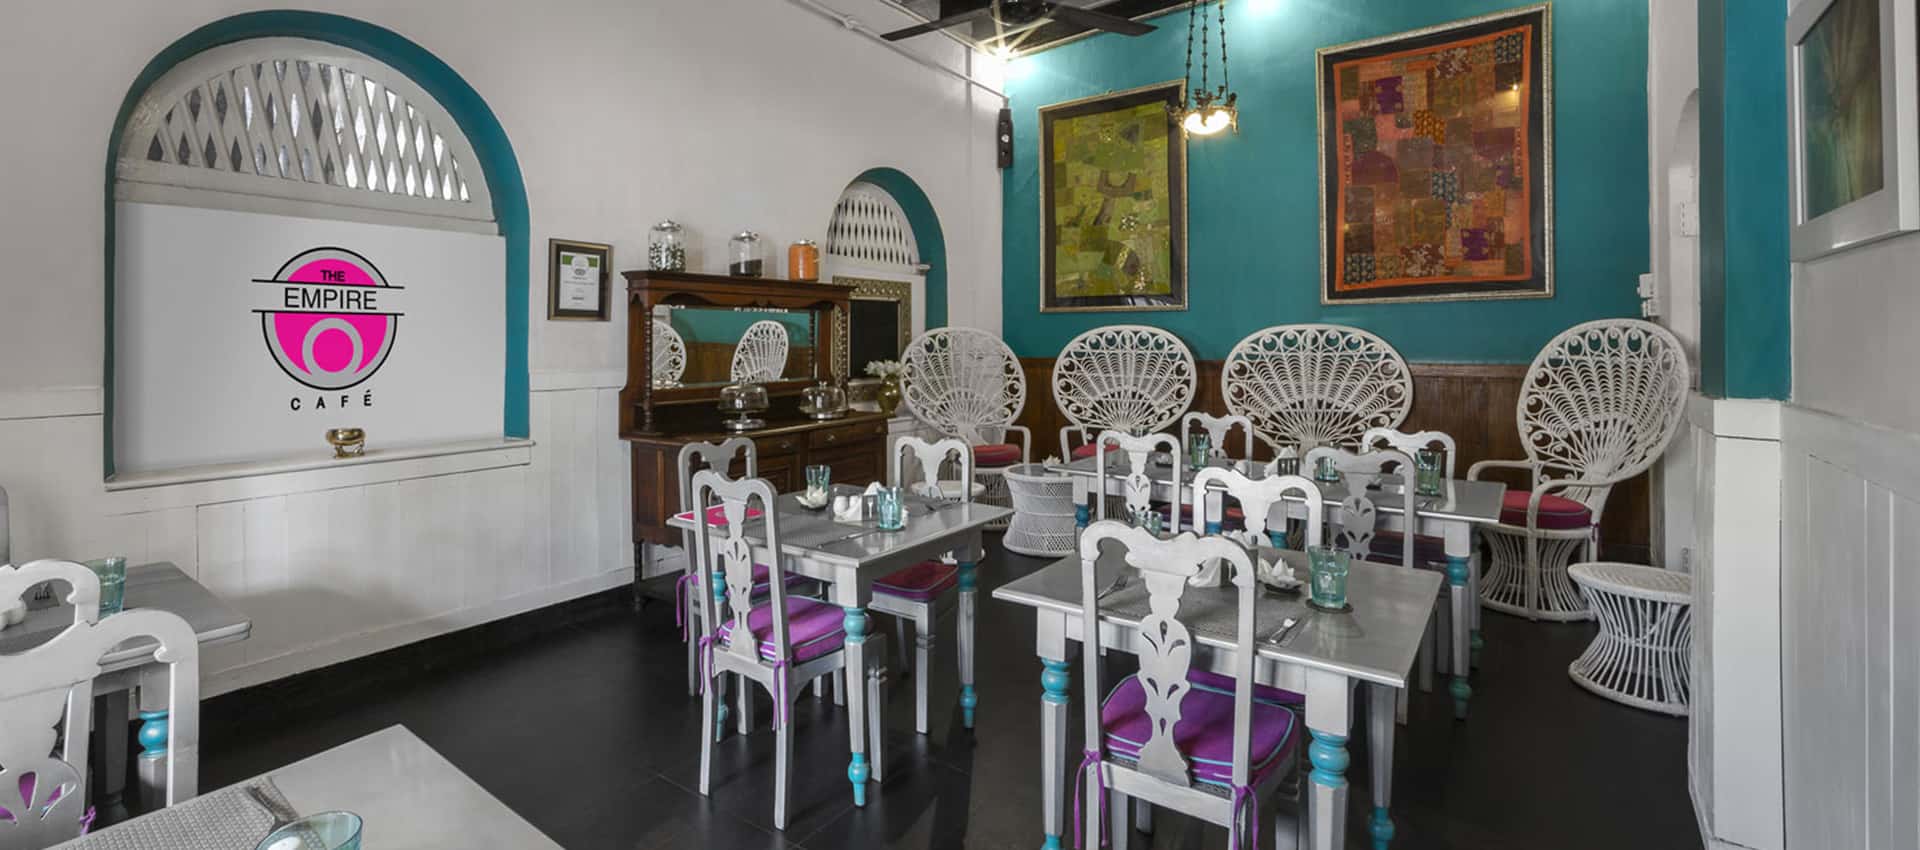 Kandy Restaurant Guide